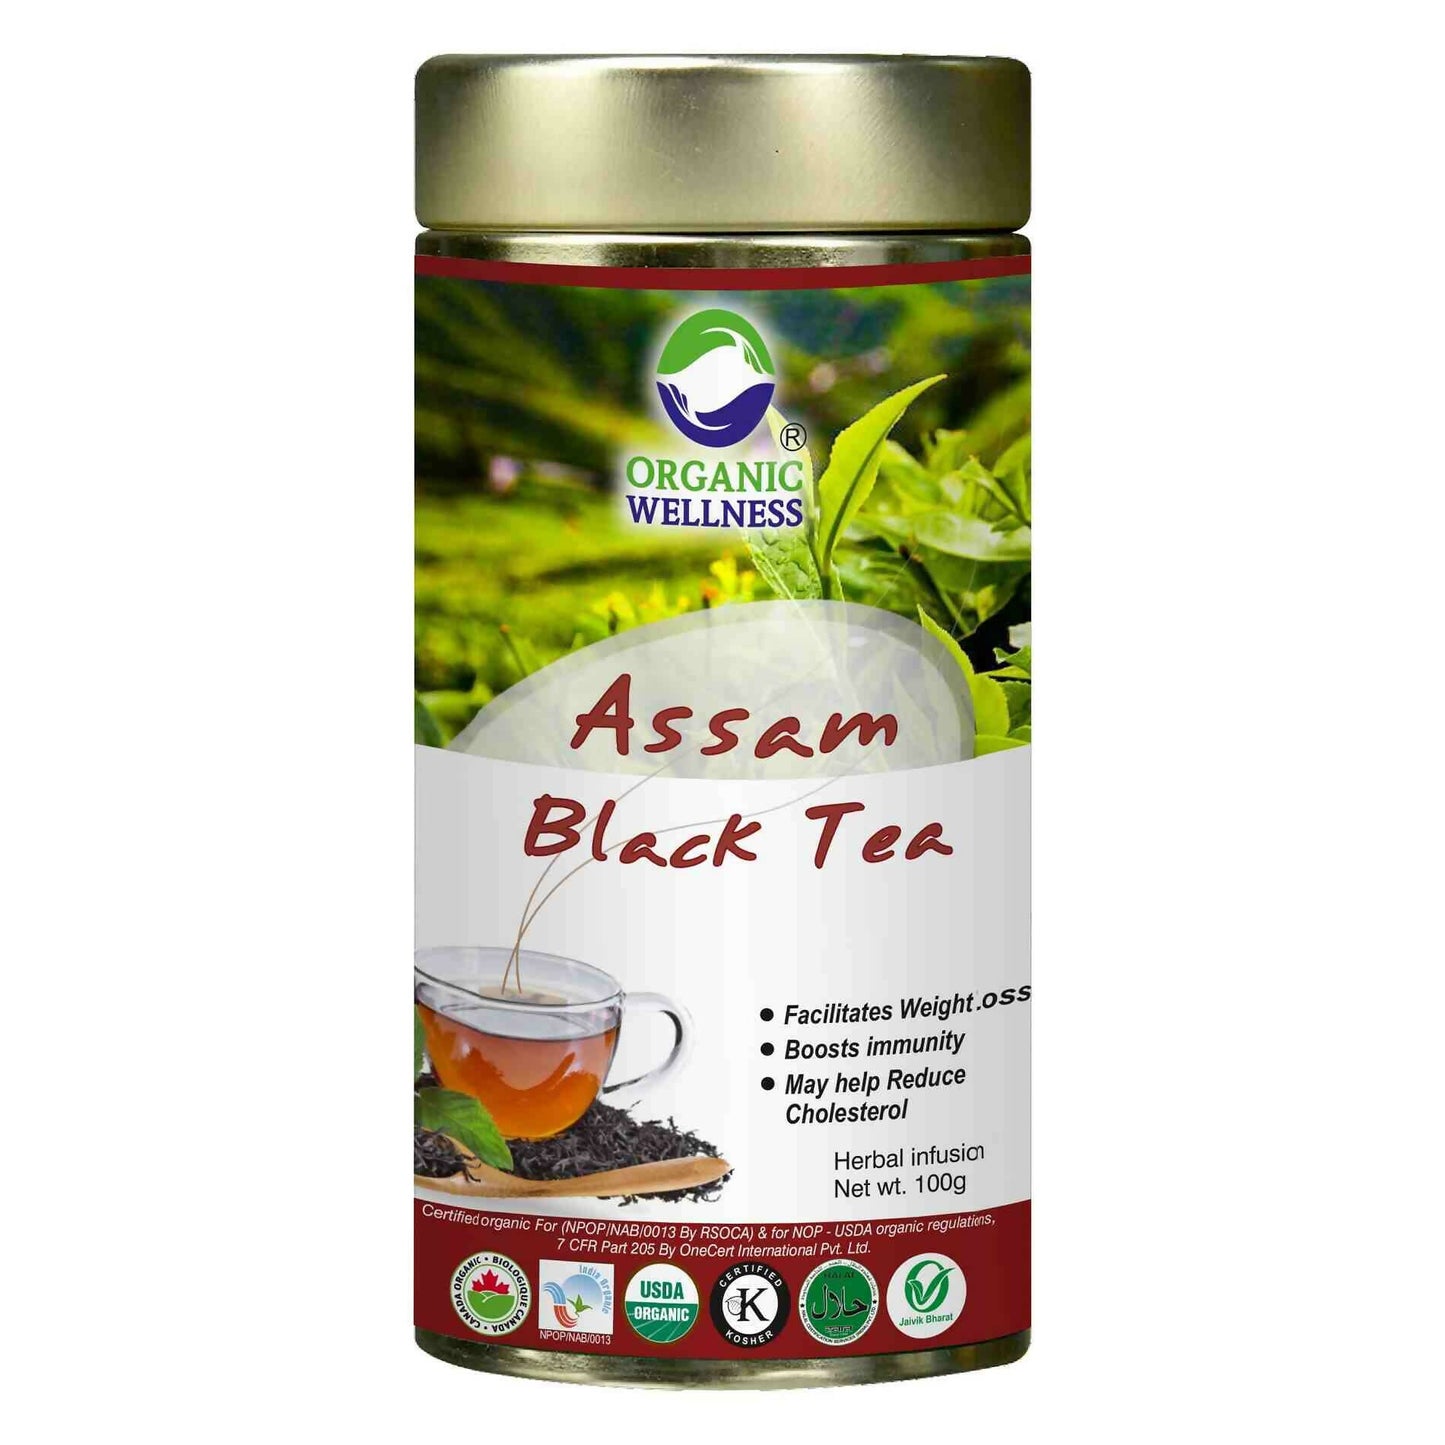 Organic Wellness Assam Black Tea - BUDNE